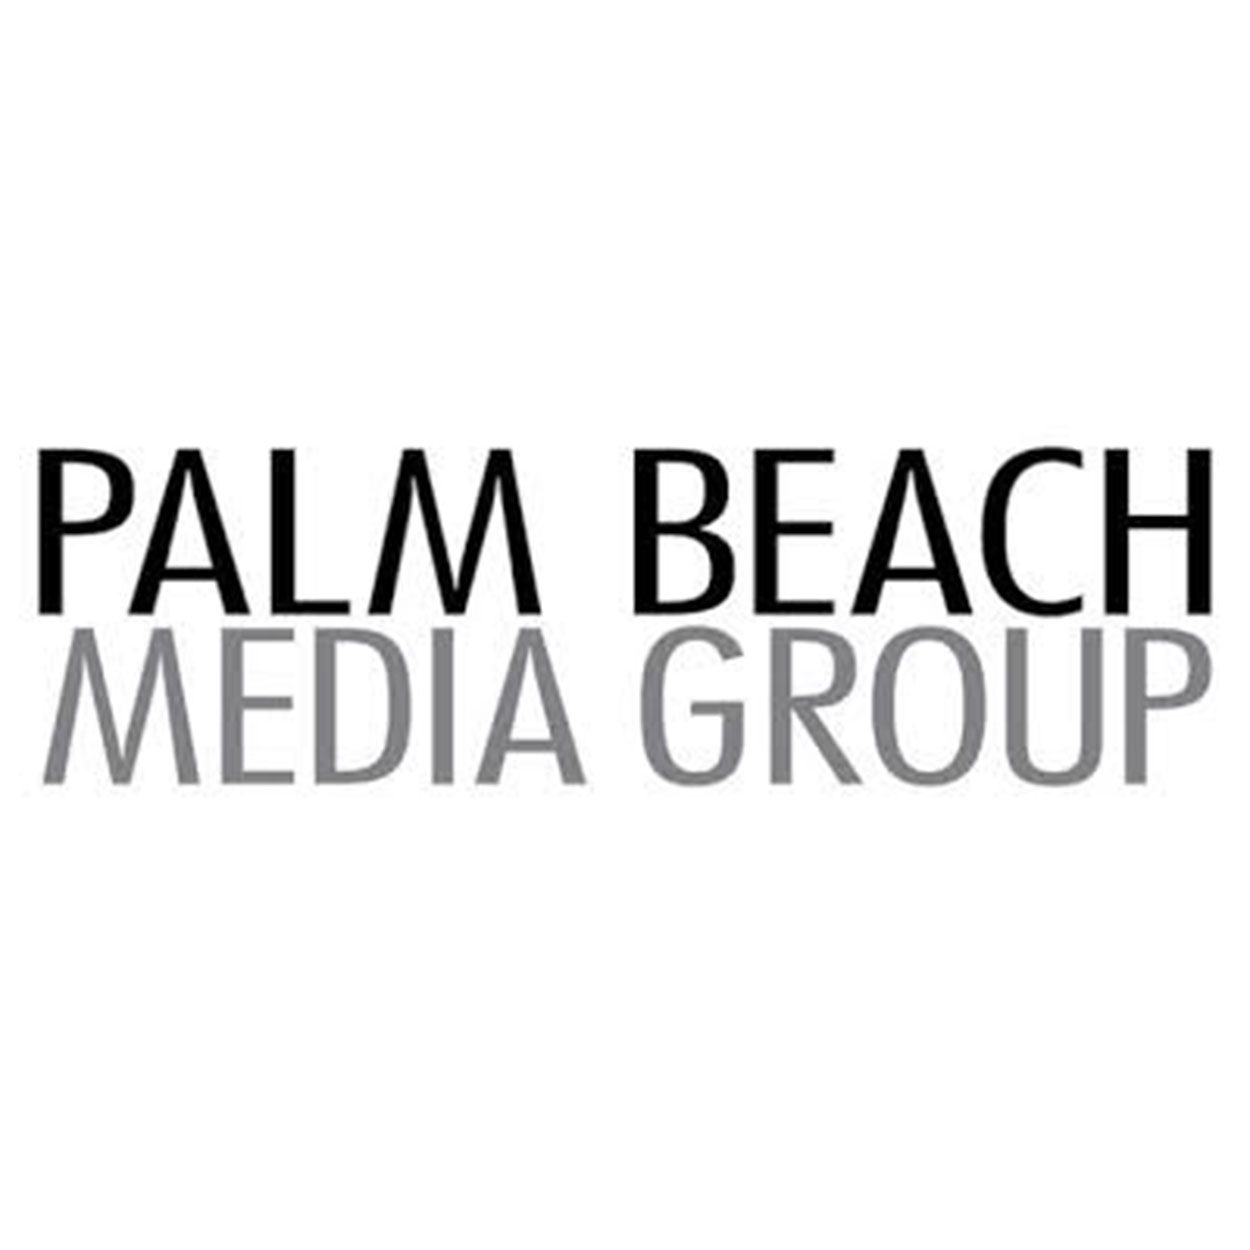 Palm Beach Media Group logo